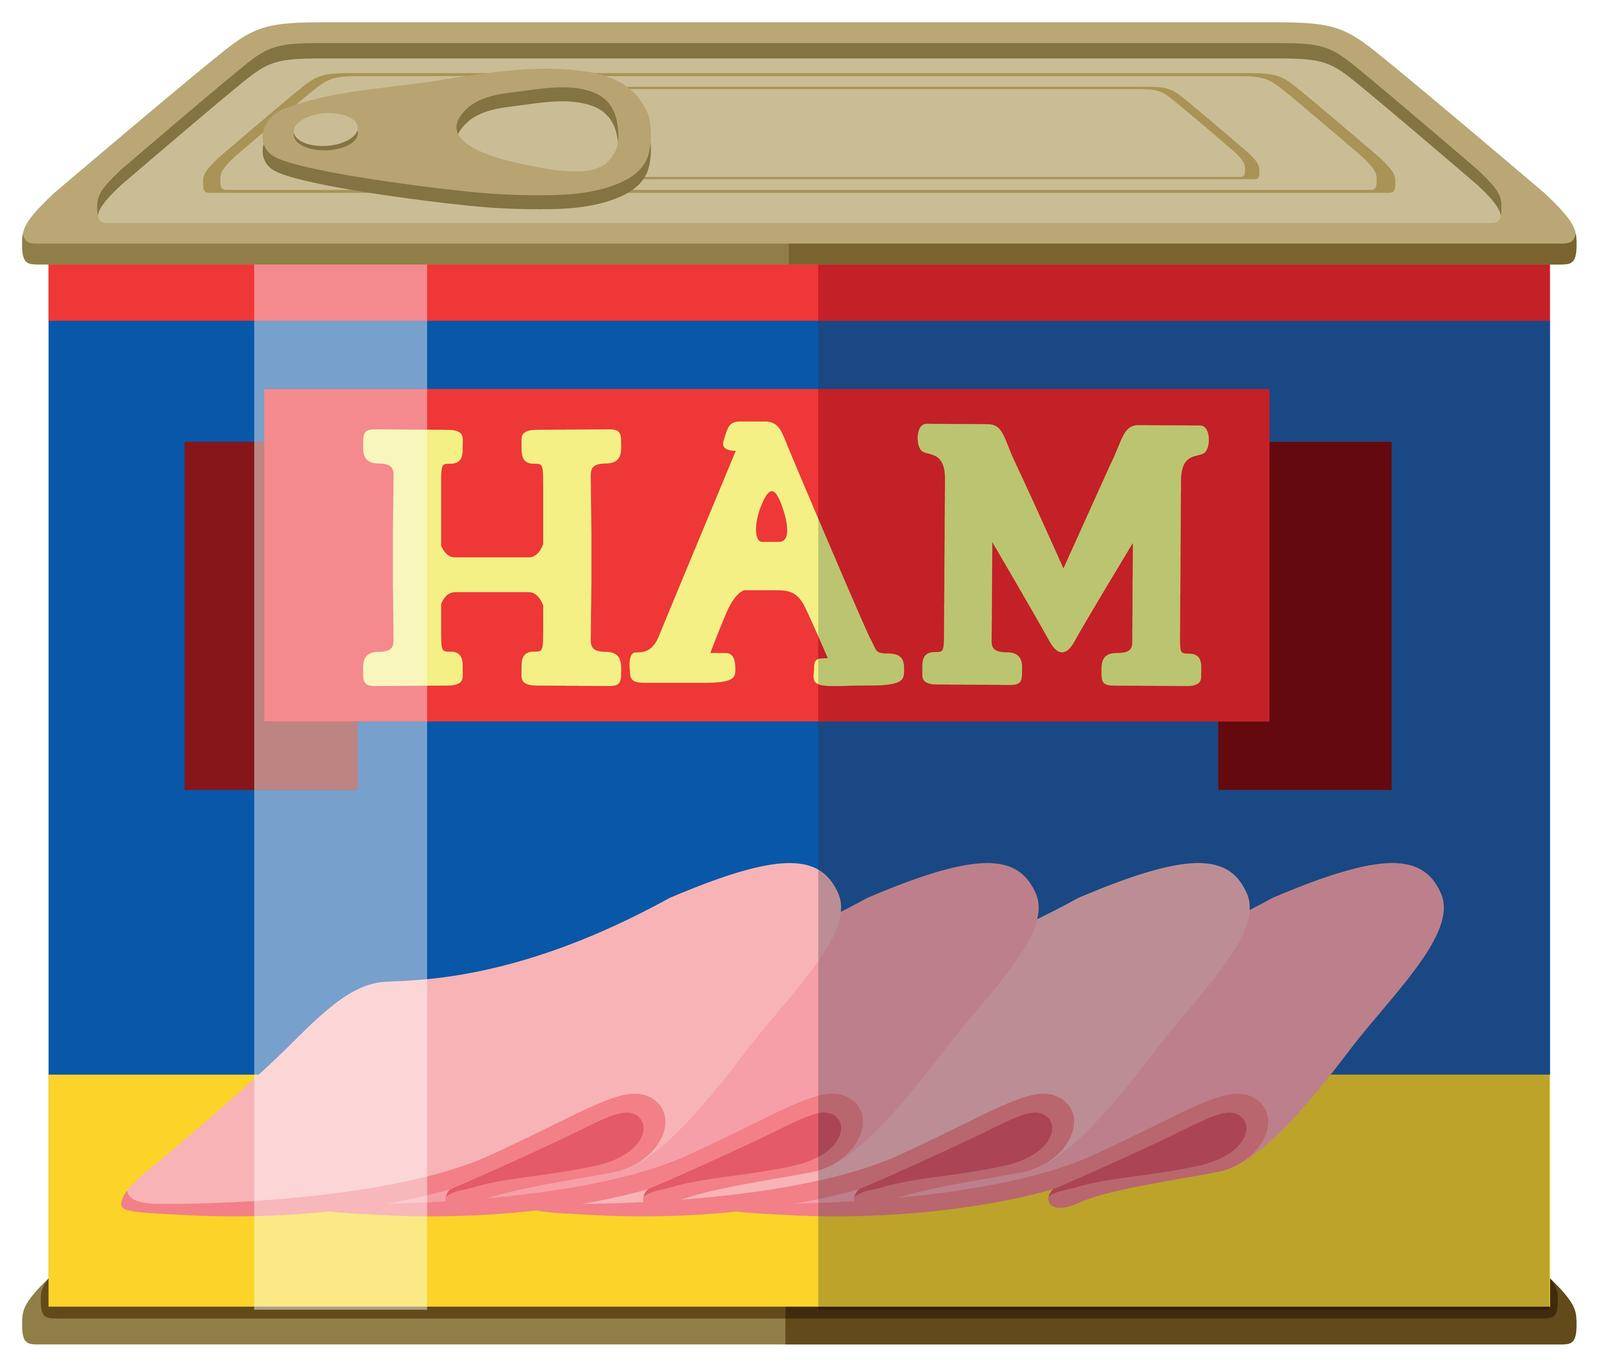 Ham in square can illustration